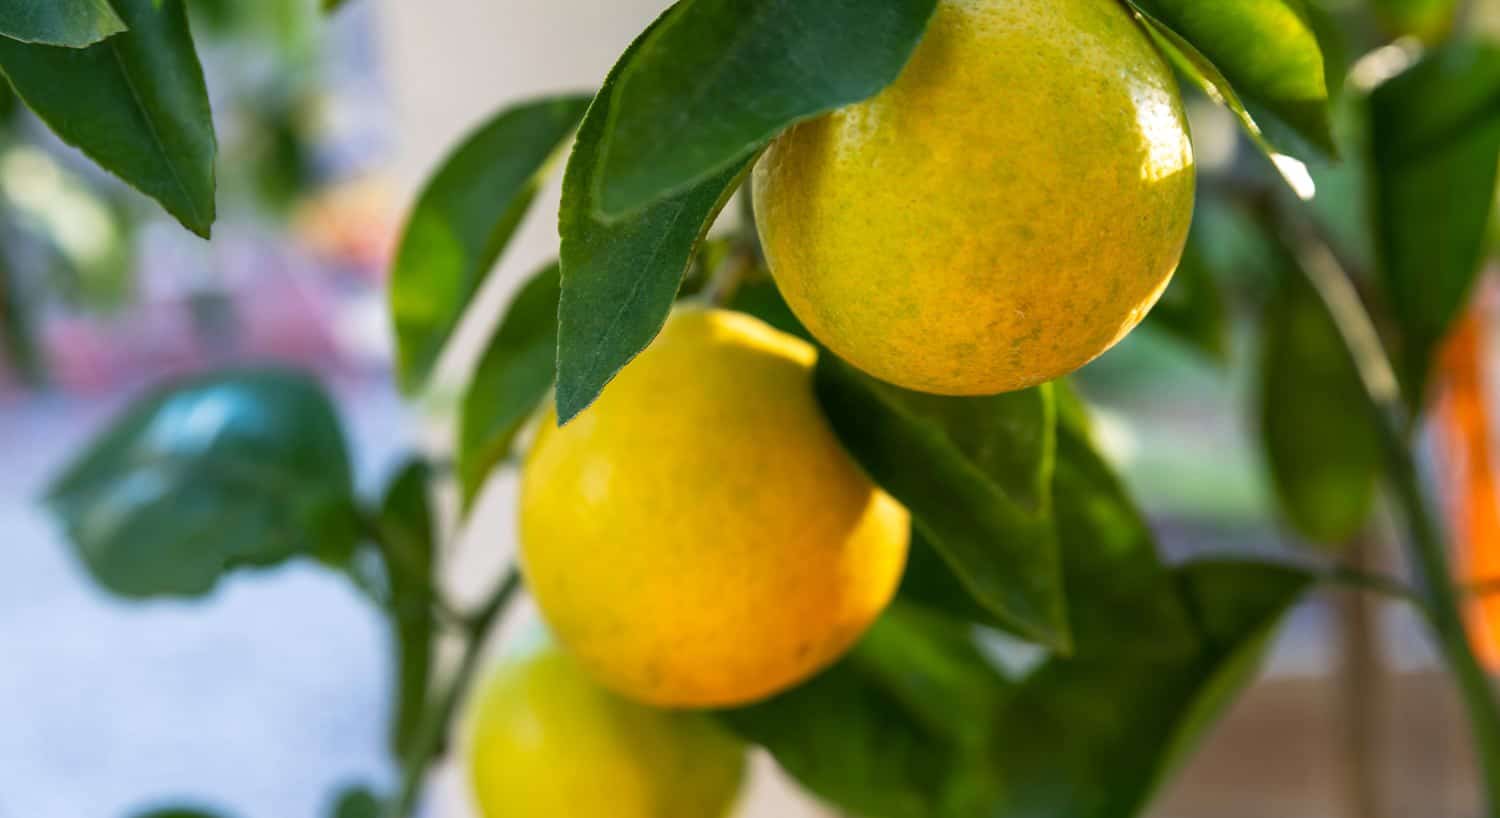 Close up view of three yellow lemons